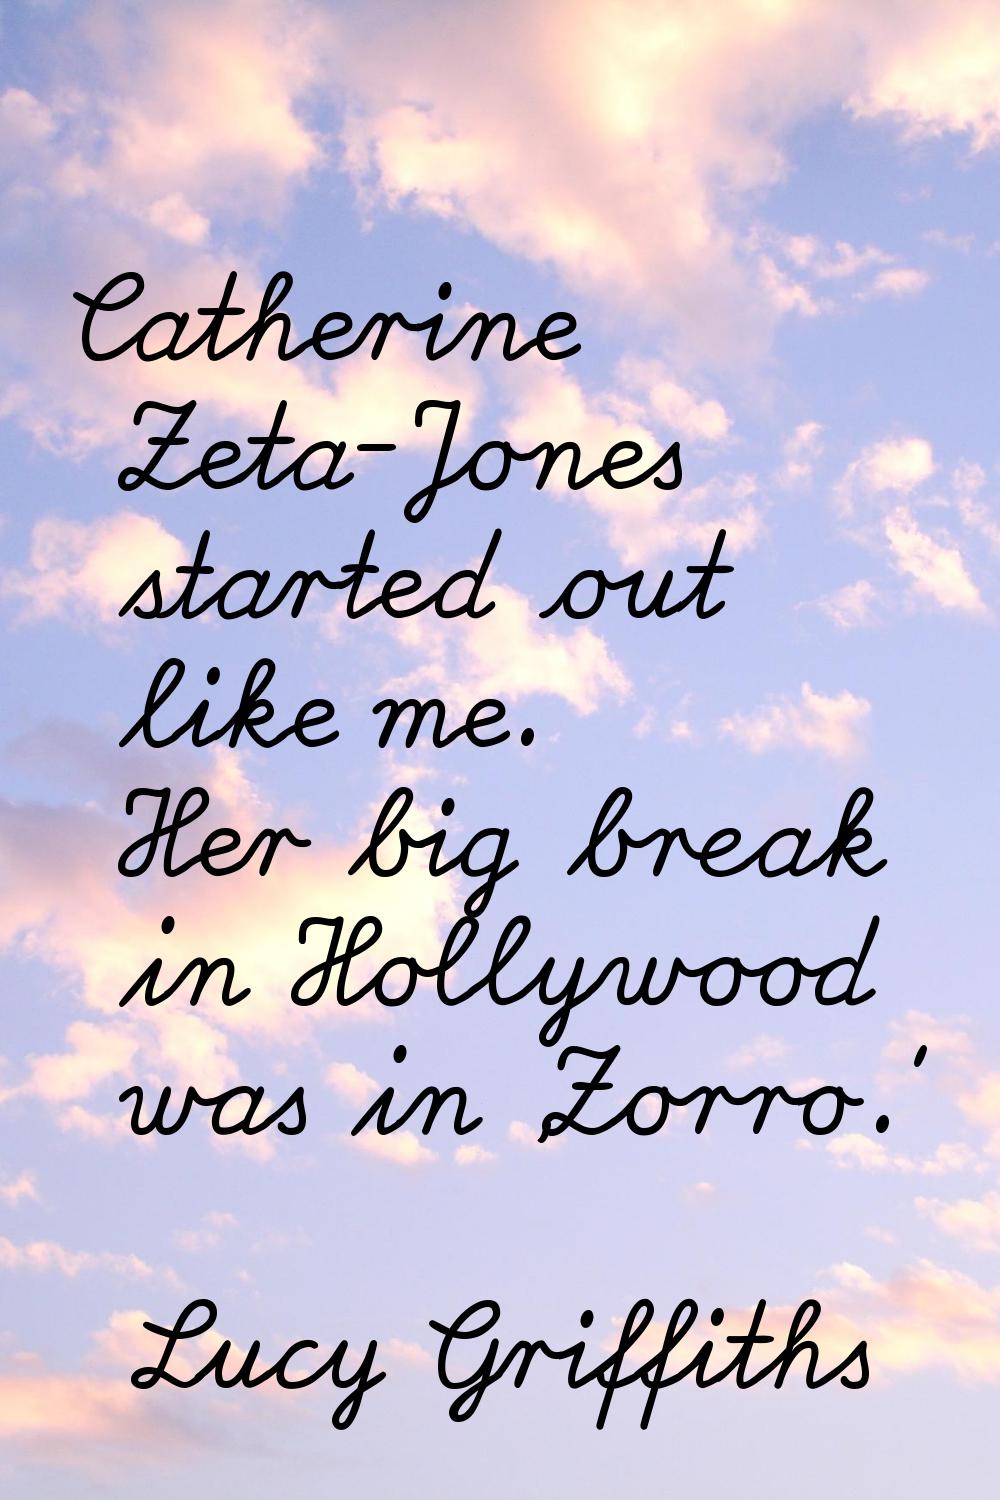 Catherine Zeta-Jones started out like me. Her big break in Hollywood was in 'Zorro.'